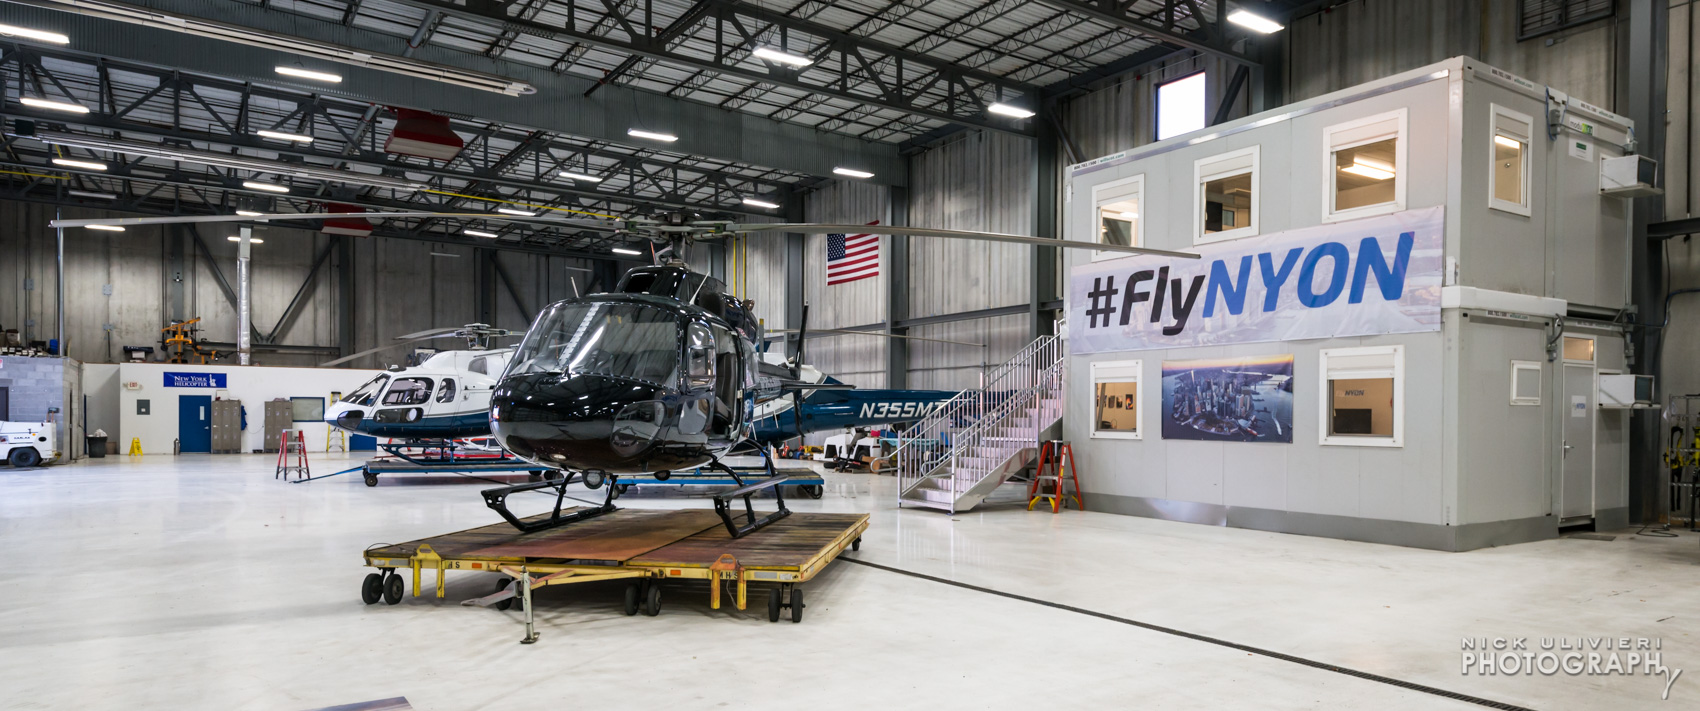 #FlyNYON - Kearny Heliport Hangar